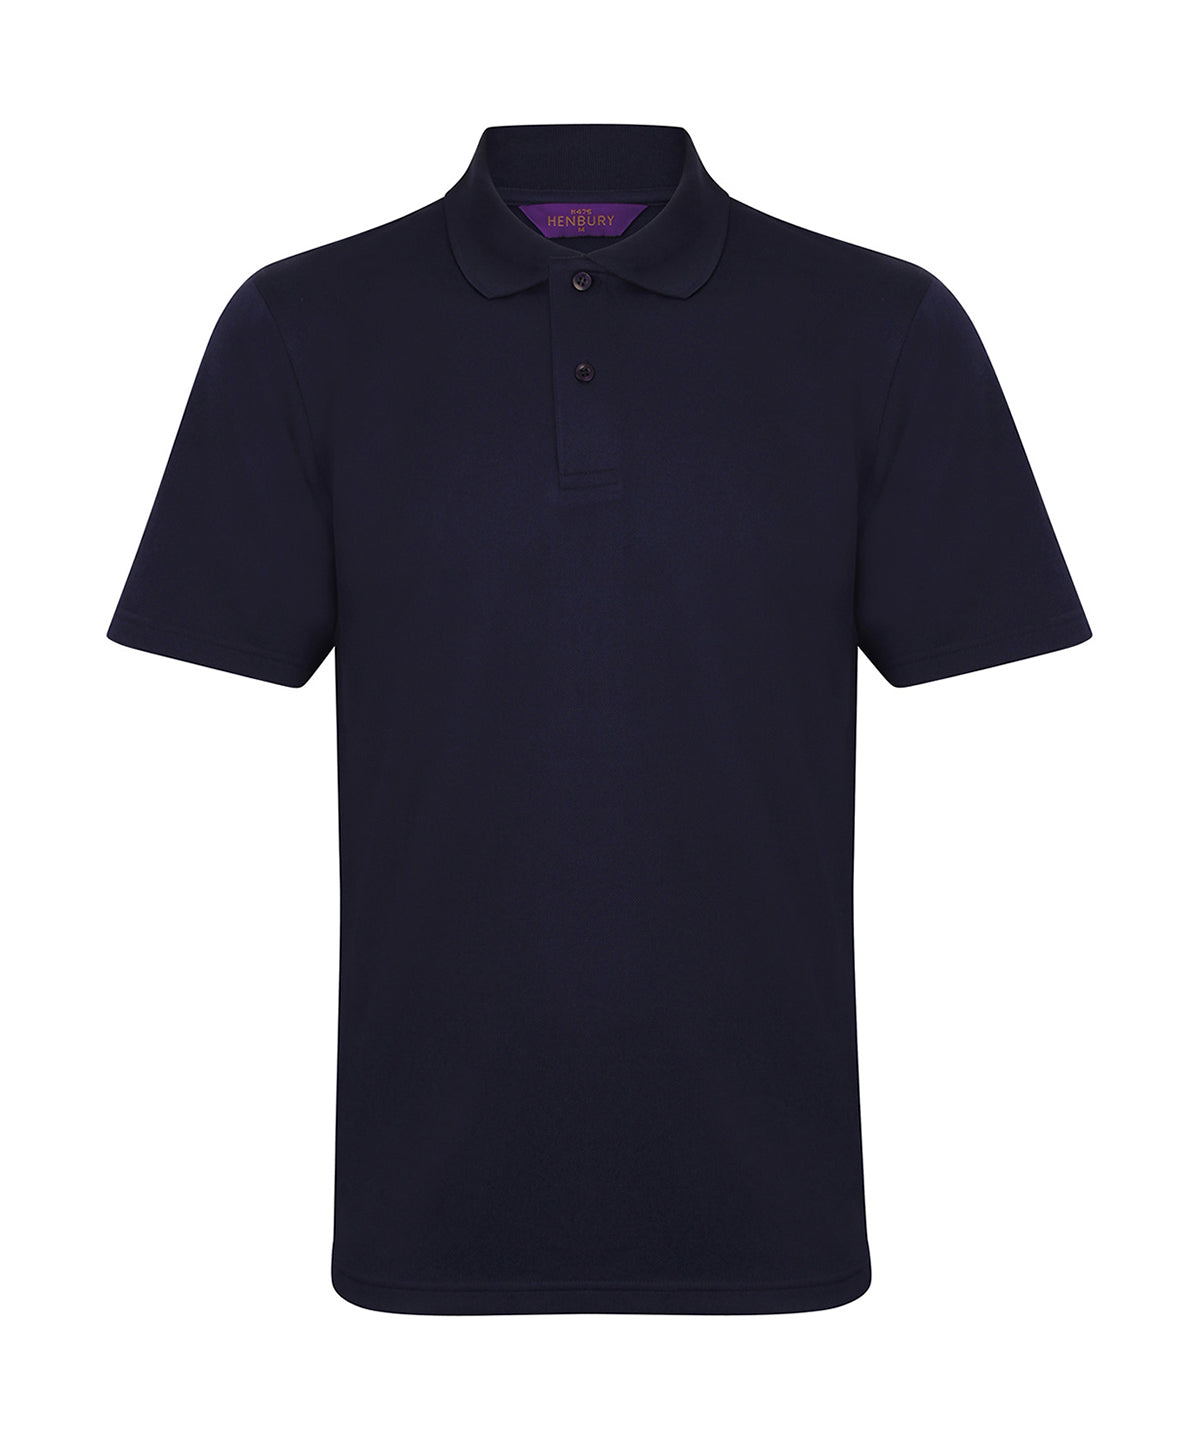 Personalised Polo Shirts - Mid Orange Henbury Coolplus® polo shirt